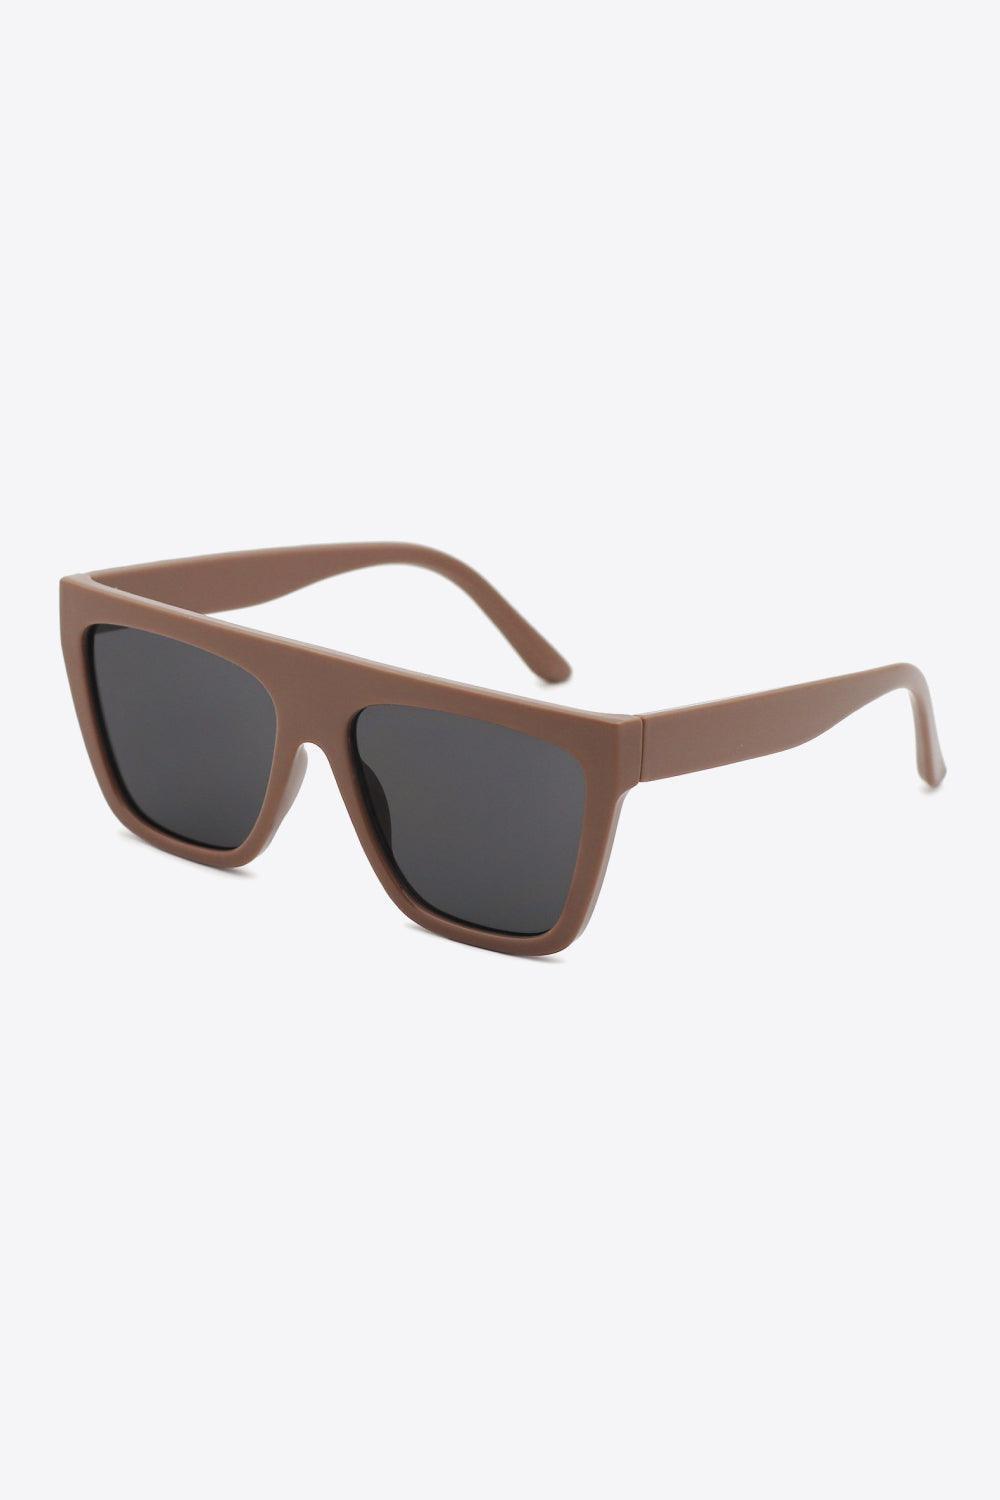 Chocolate Brown Wayfarer Polycarbonate Sunglasses - MXSTUDIO.COM